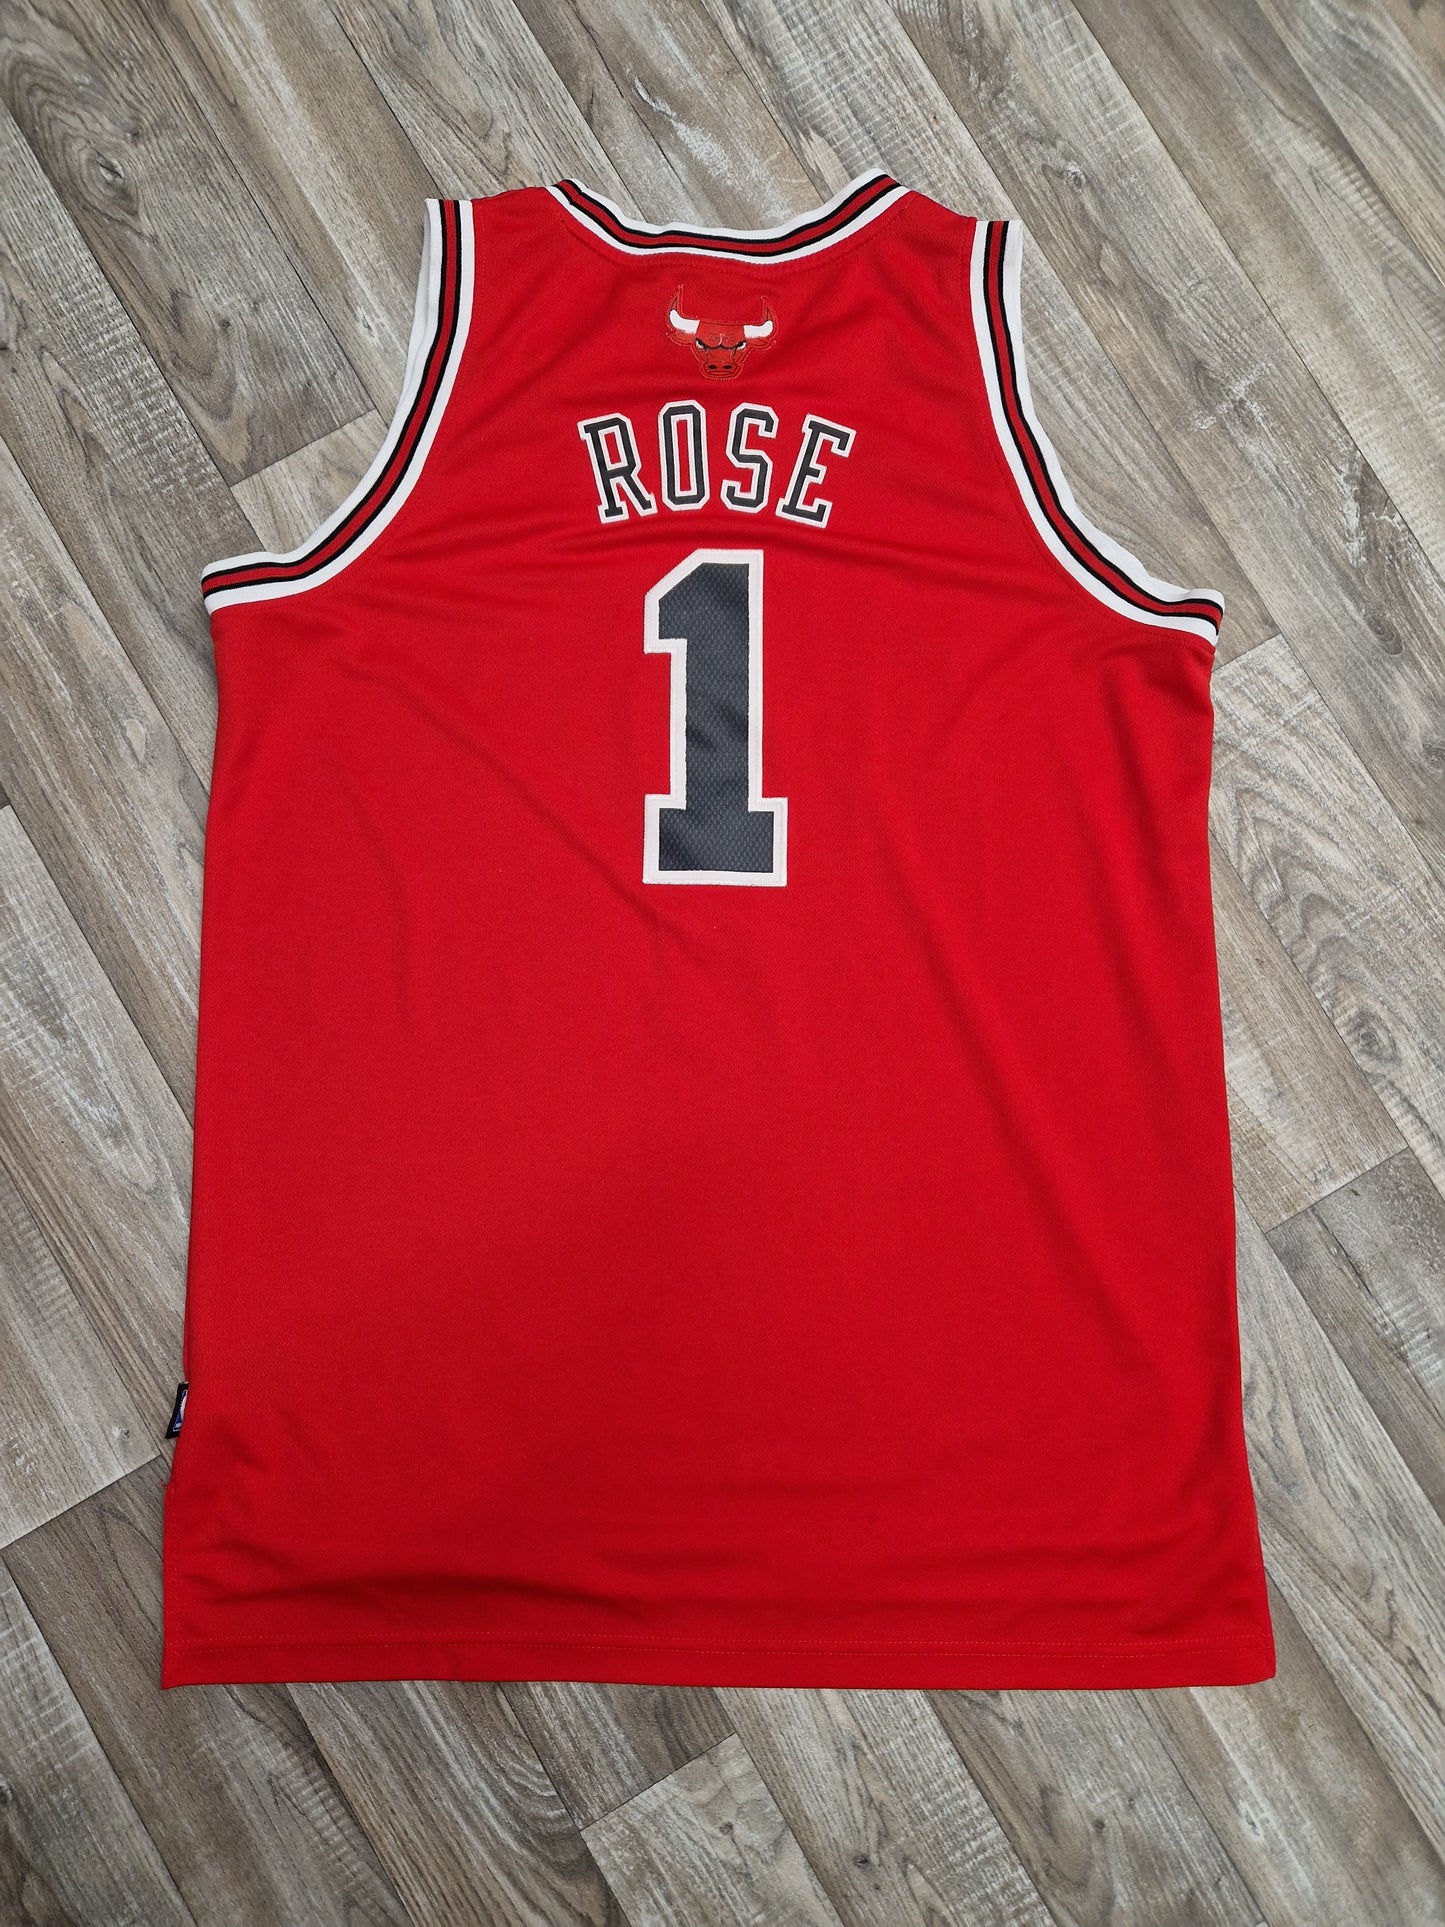 Derrick Rose Chicago Bulls Jersey Size Large